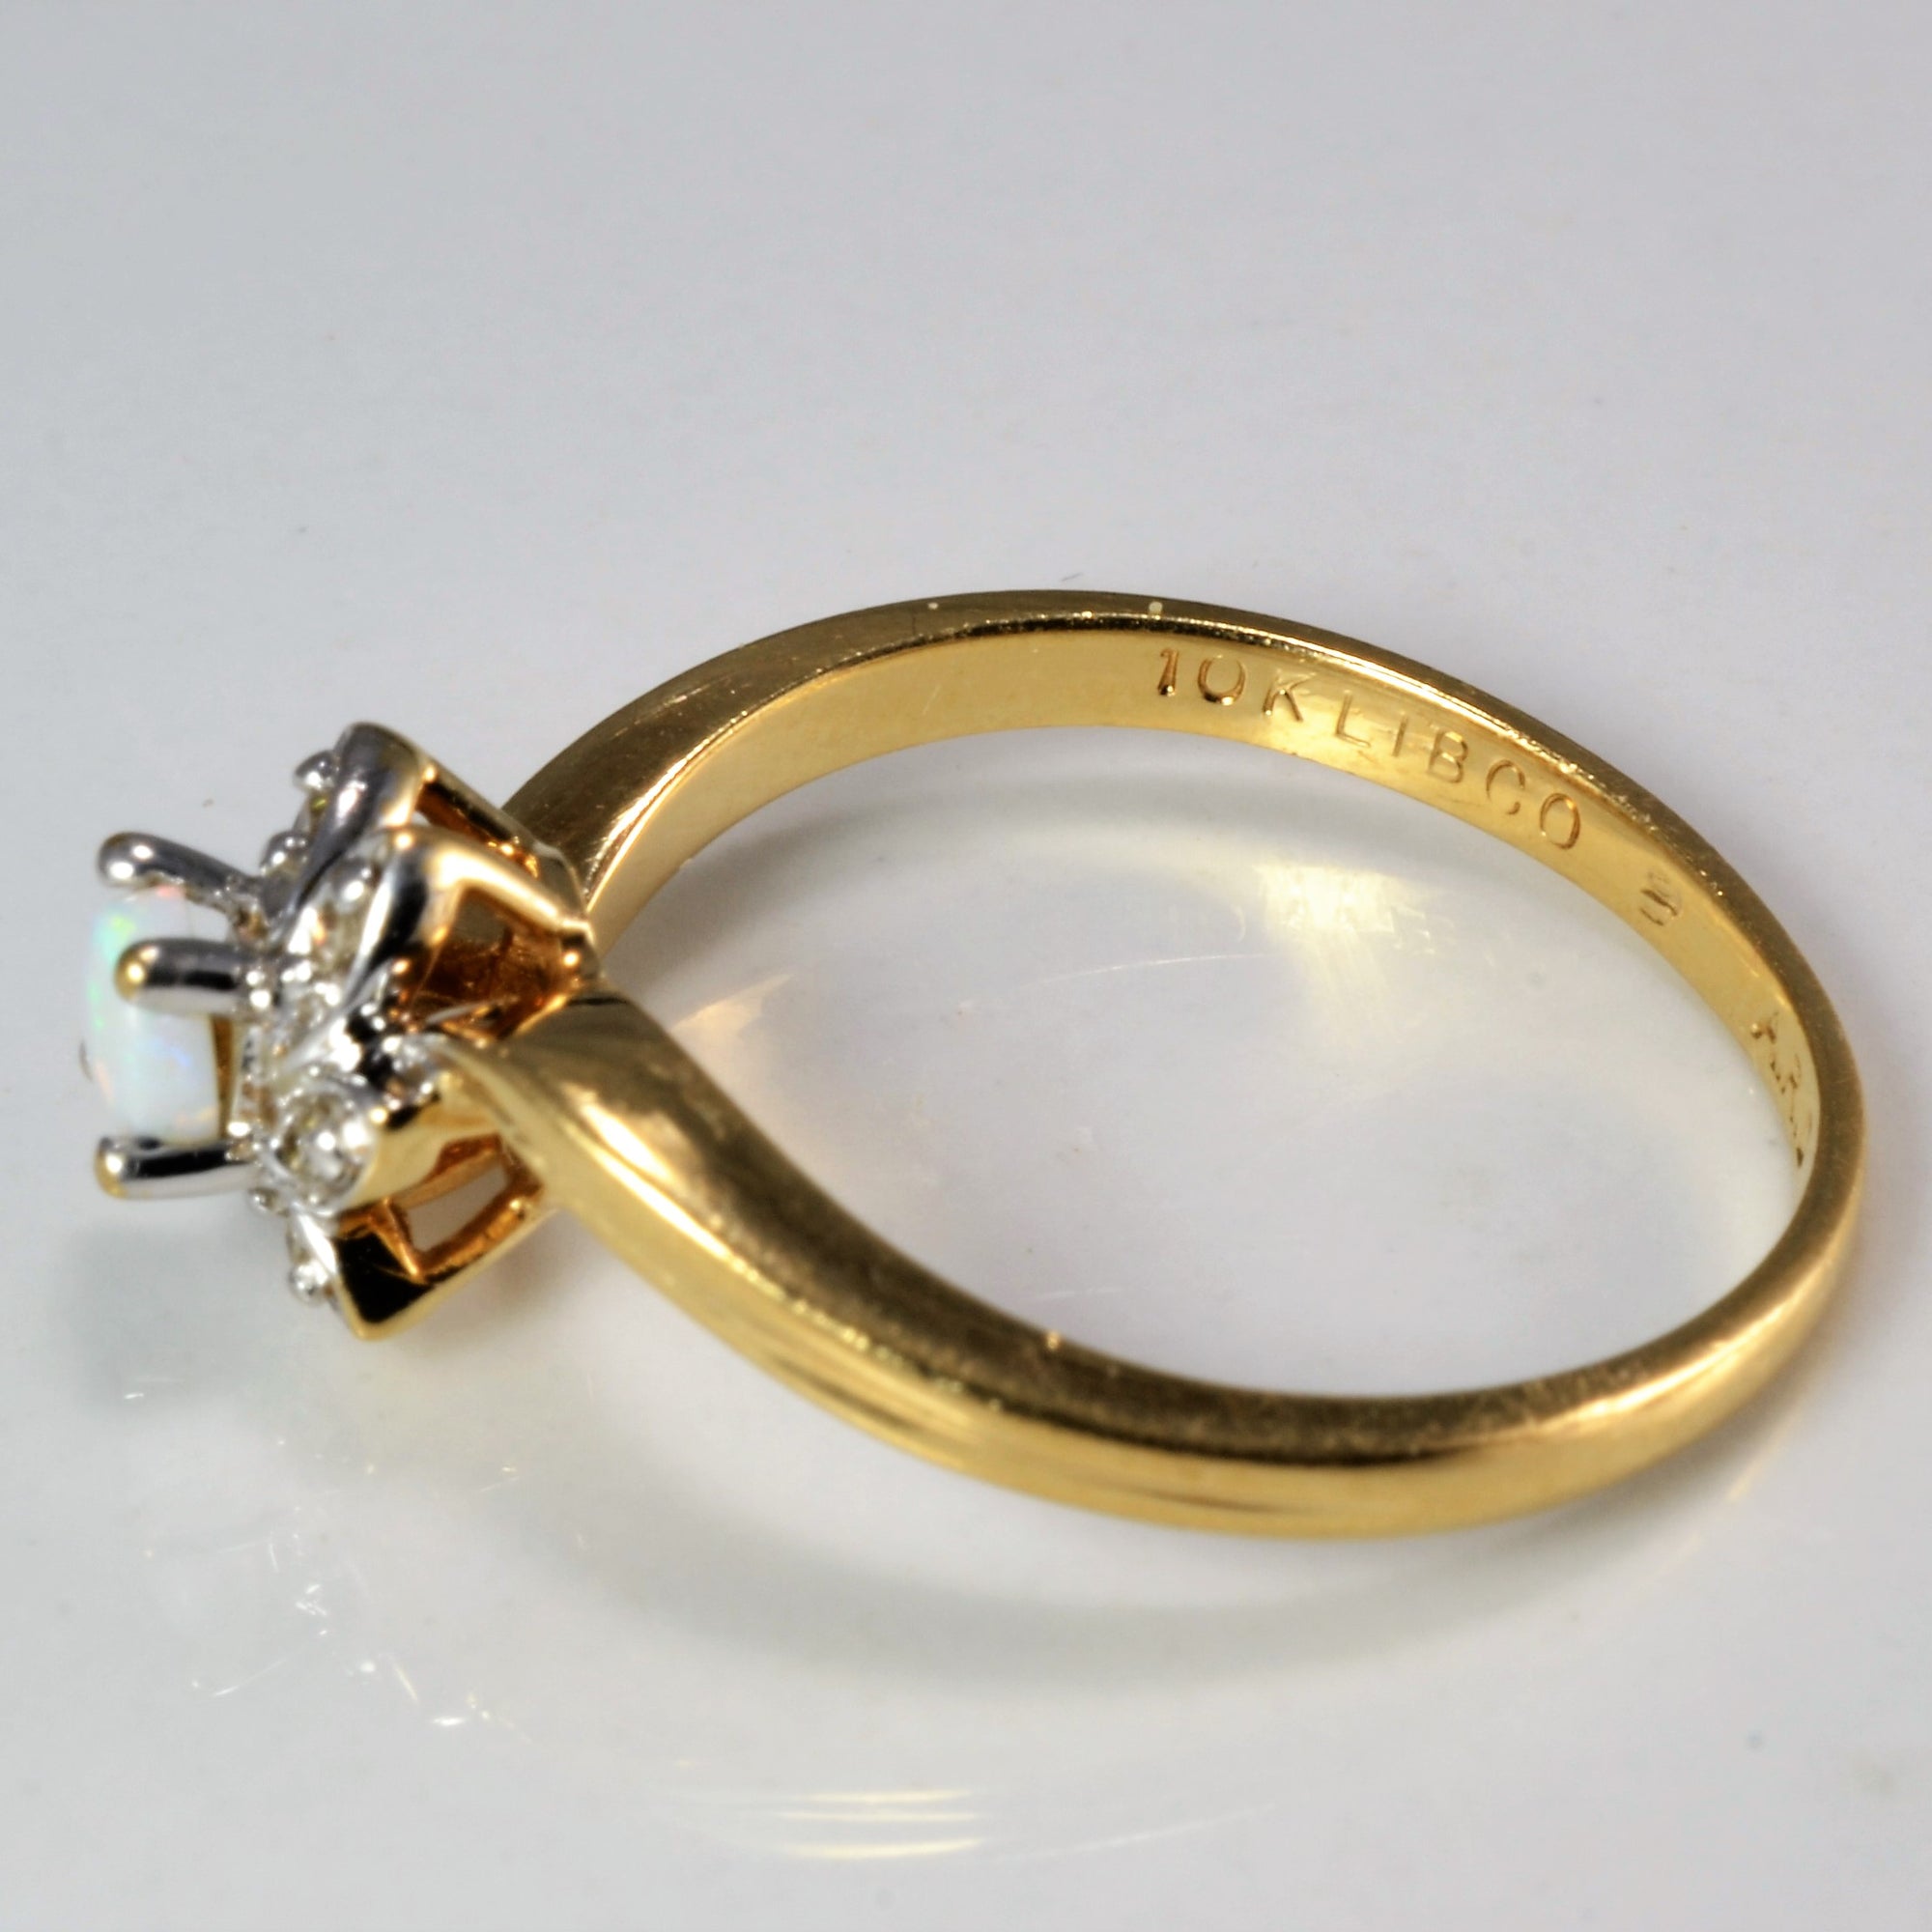 Flower Opal & Diamond Ring | 0.03 ctw, SZ 5.75 |